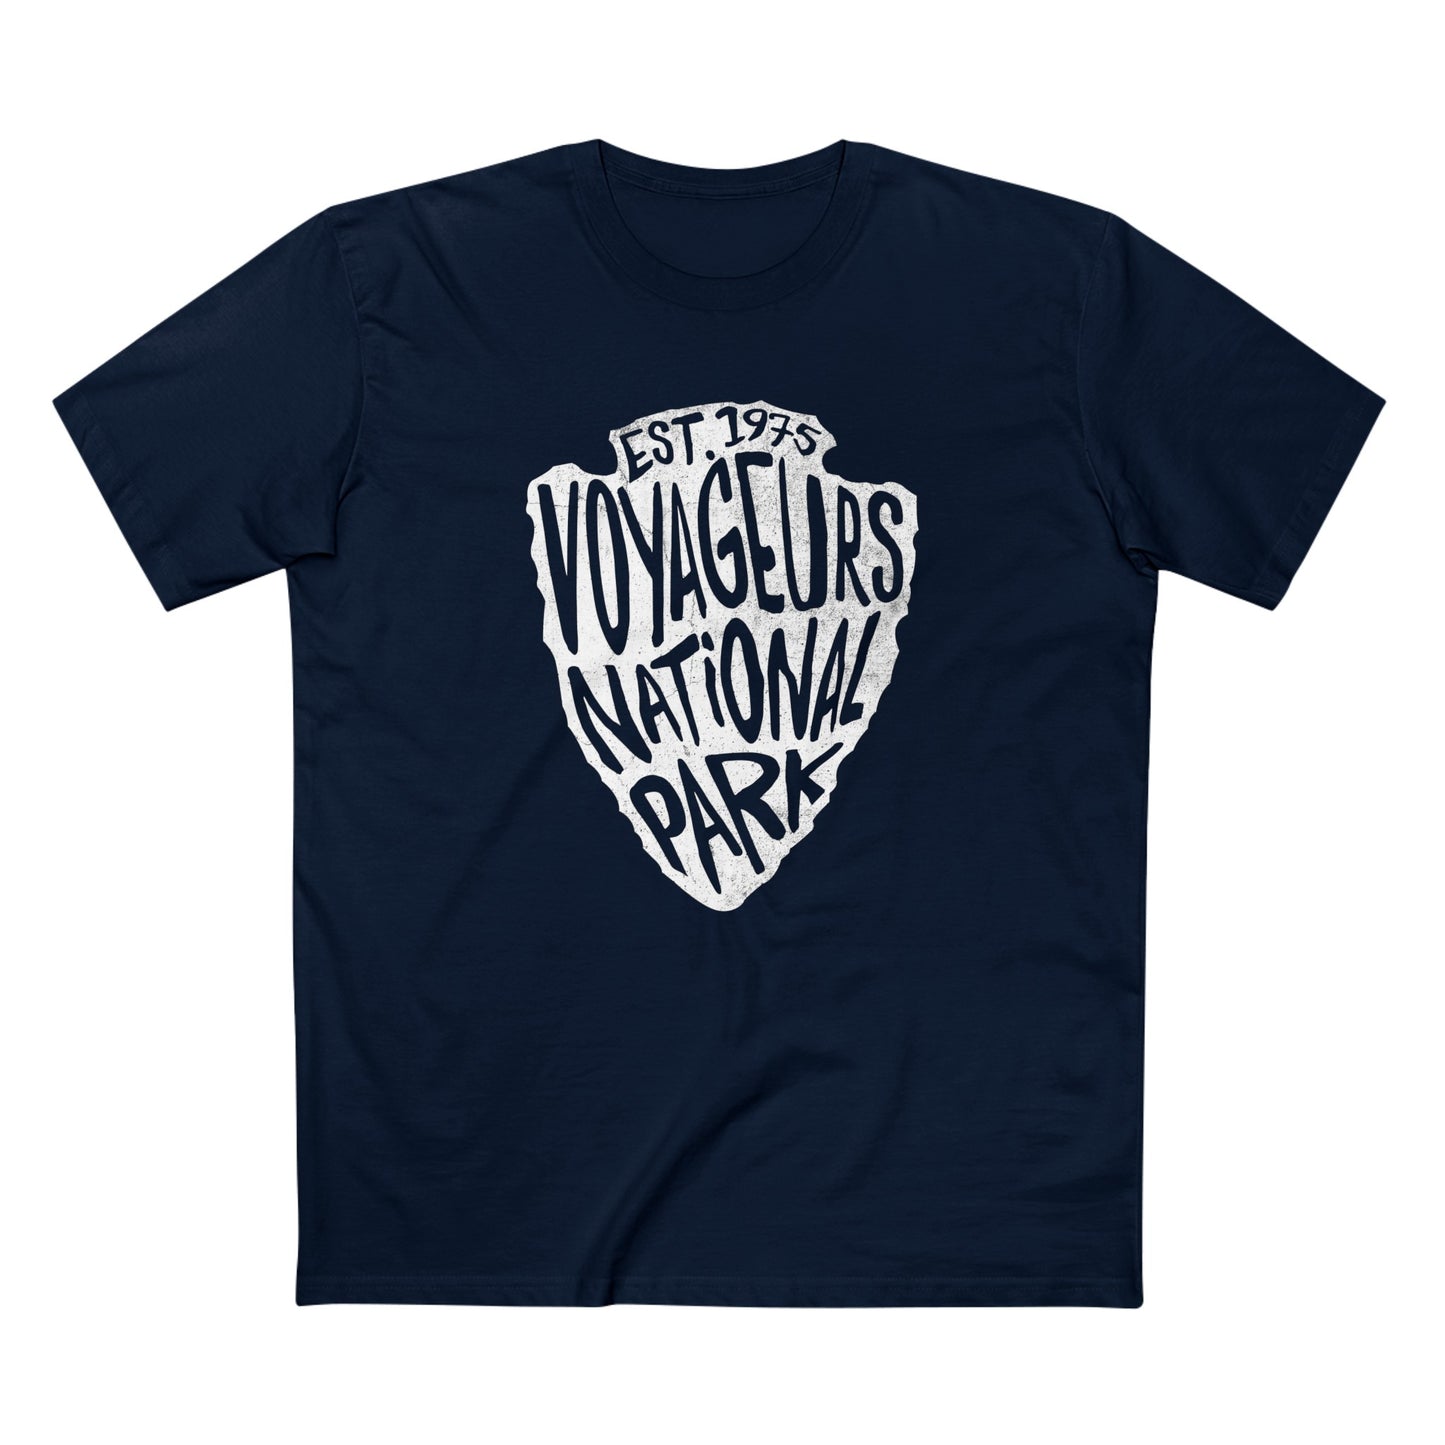 Voyageurs National Park T-Shirt - Arrowhead Design